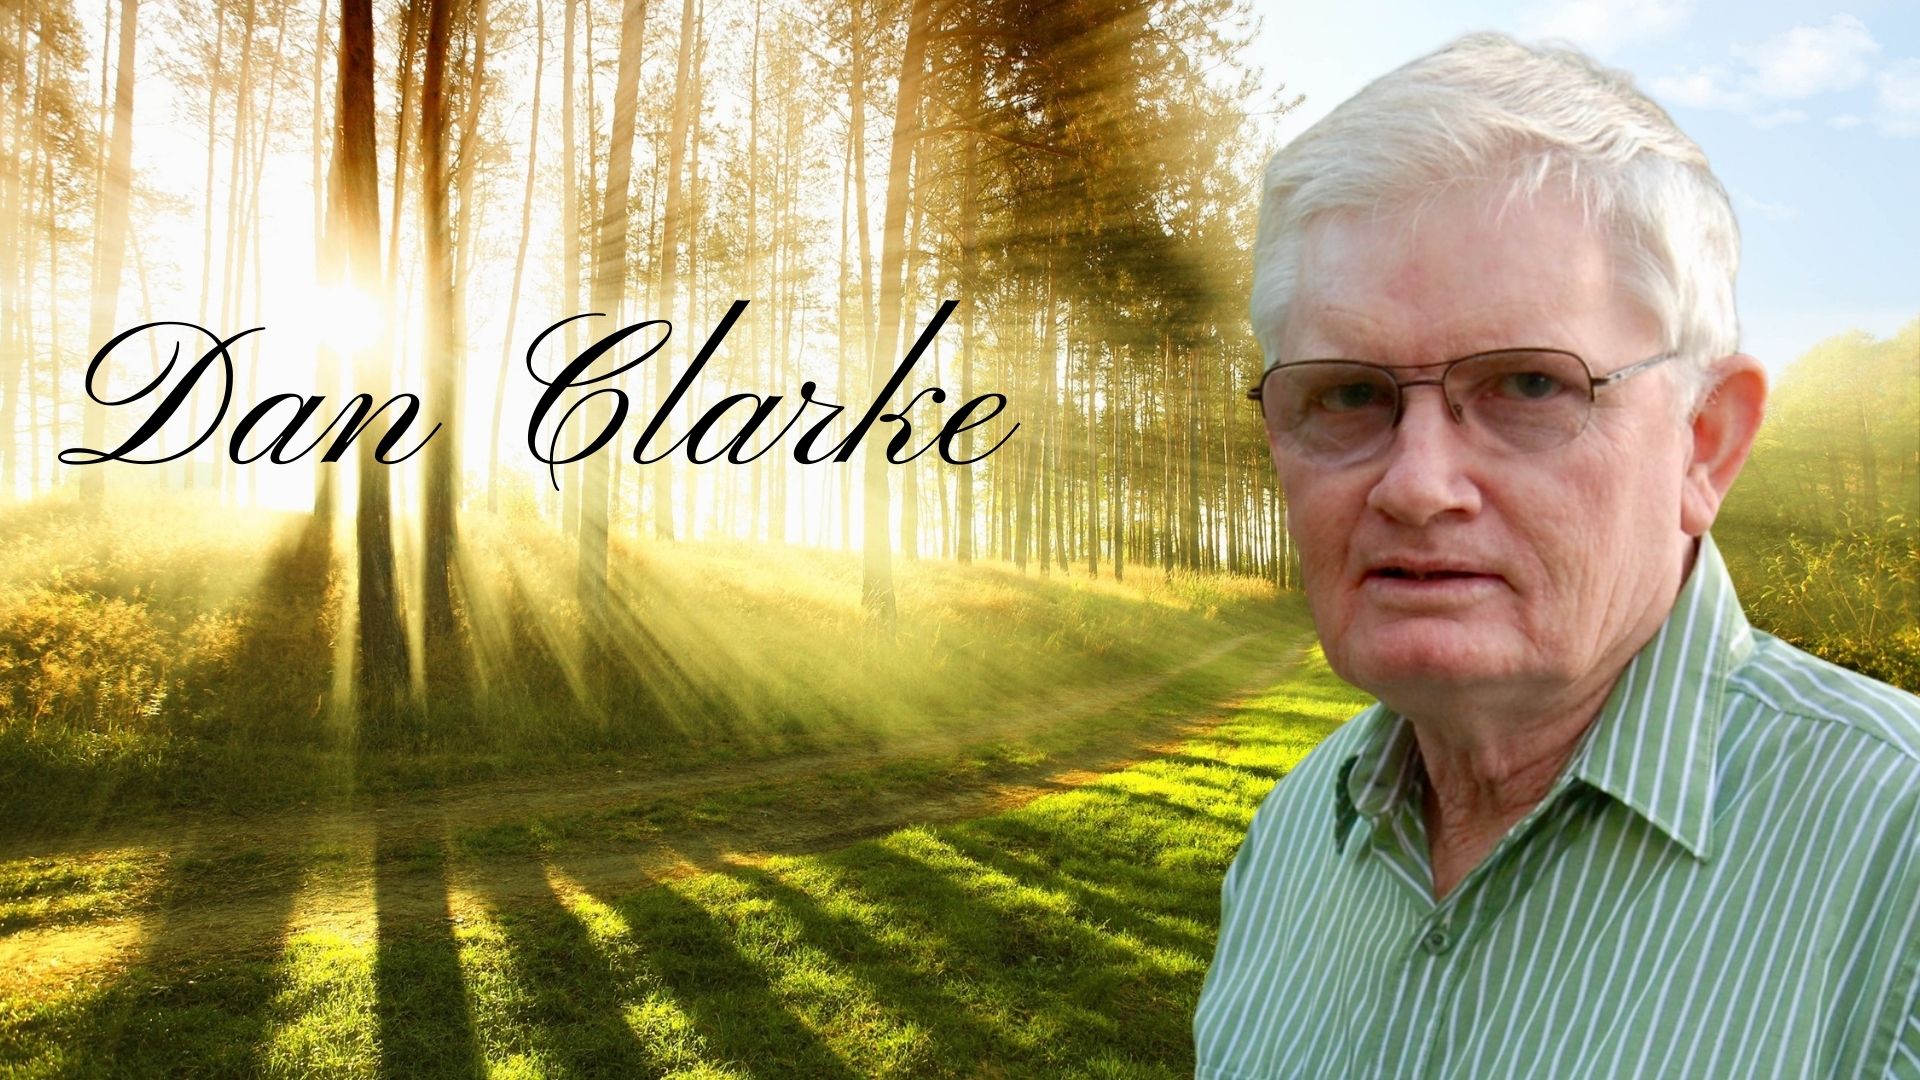 Dan Clarke